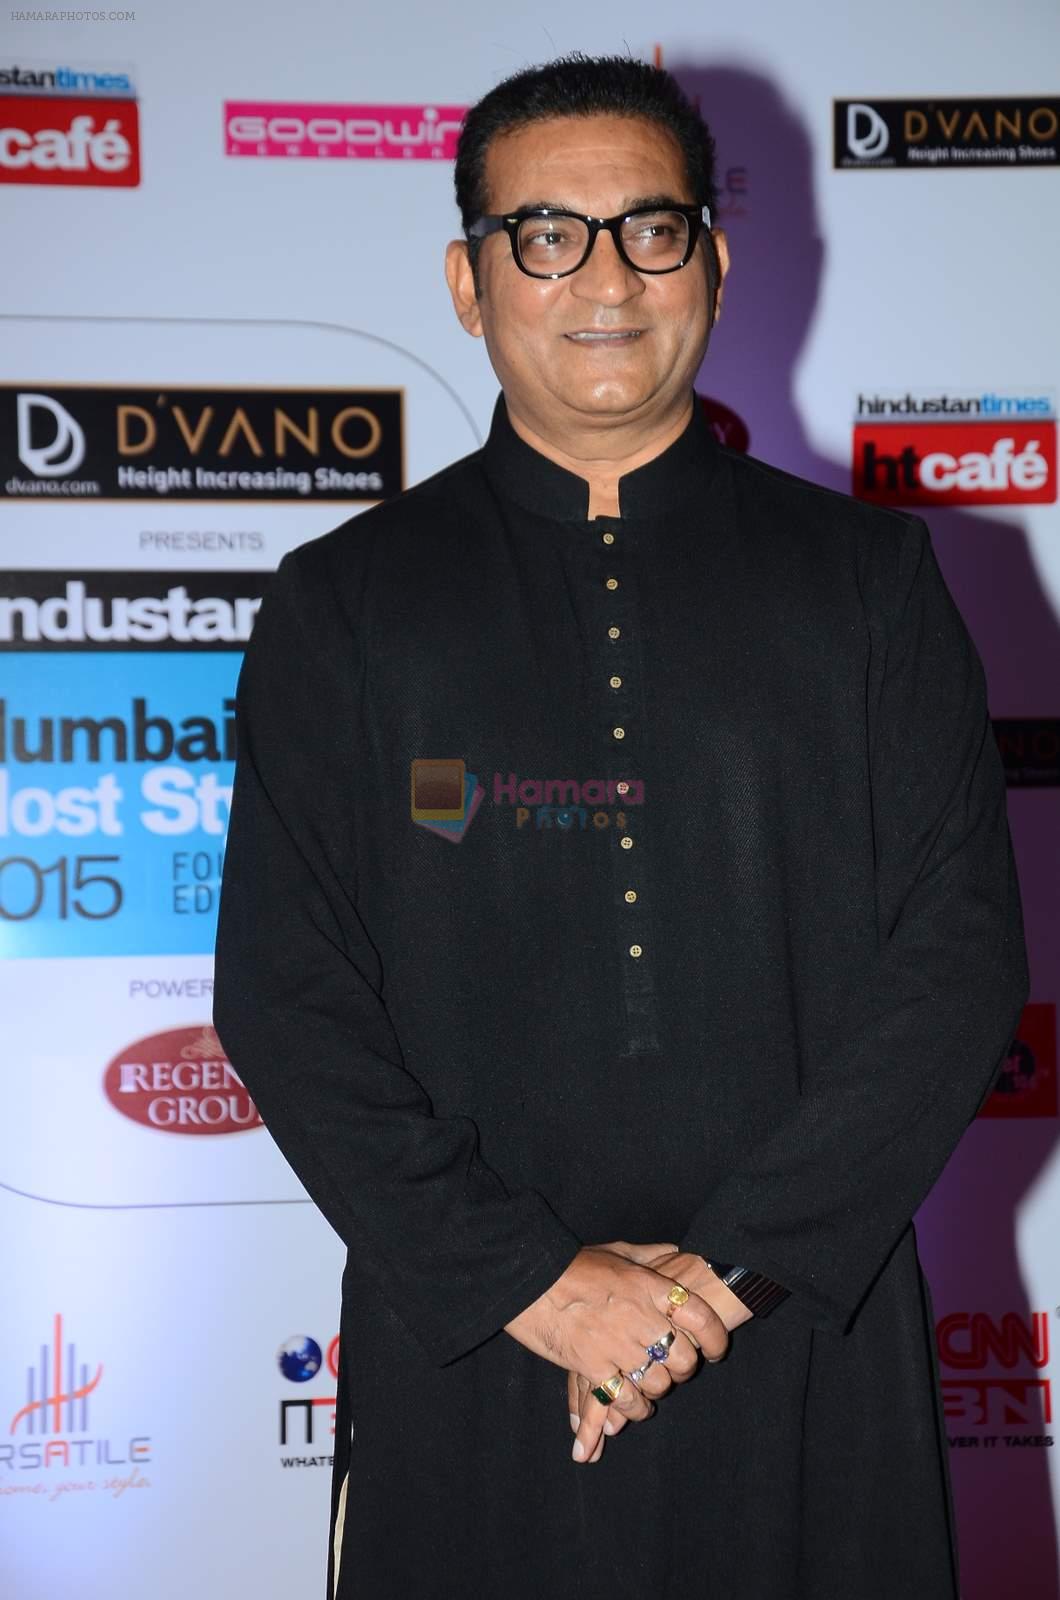 Abhijeet Bhattacharya at HT Mumbai's Most Stylish Awards 2015 in Mumbai on 26th March 2015